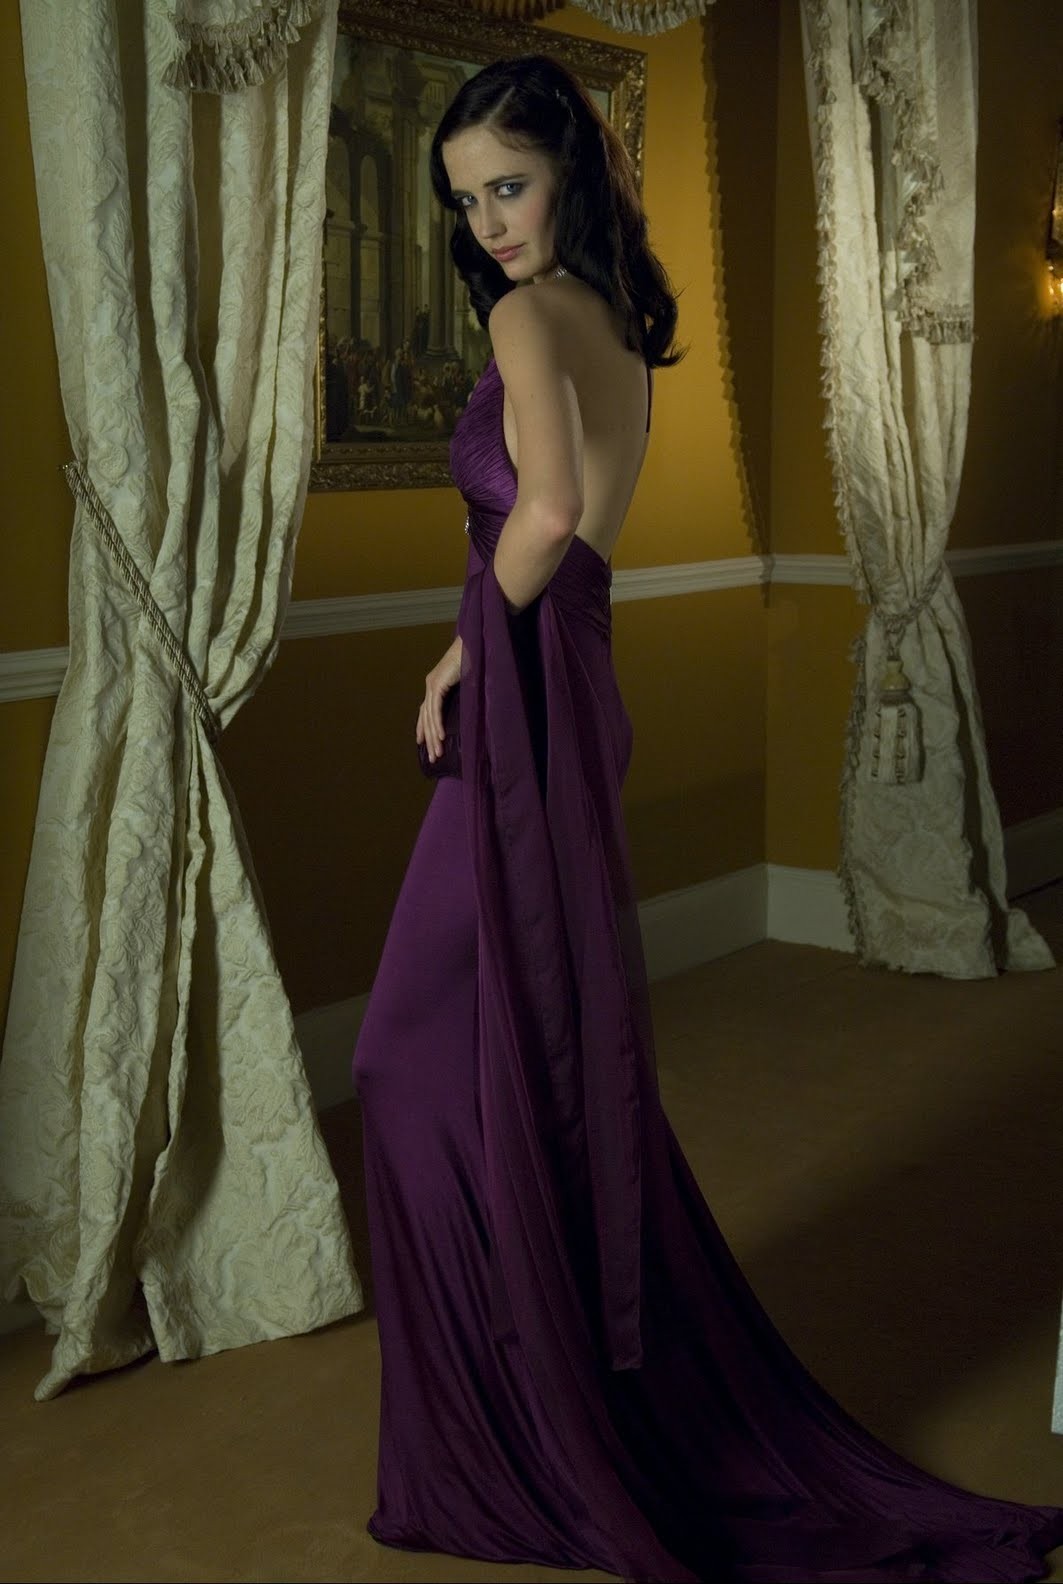 eva green casino royale purple dress